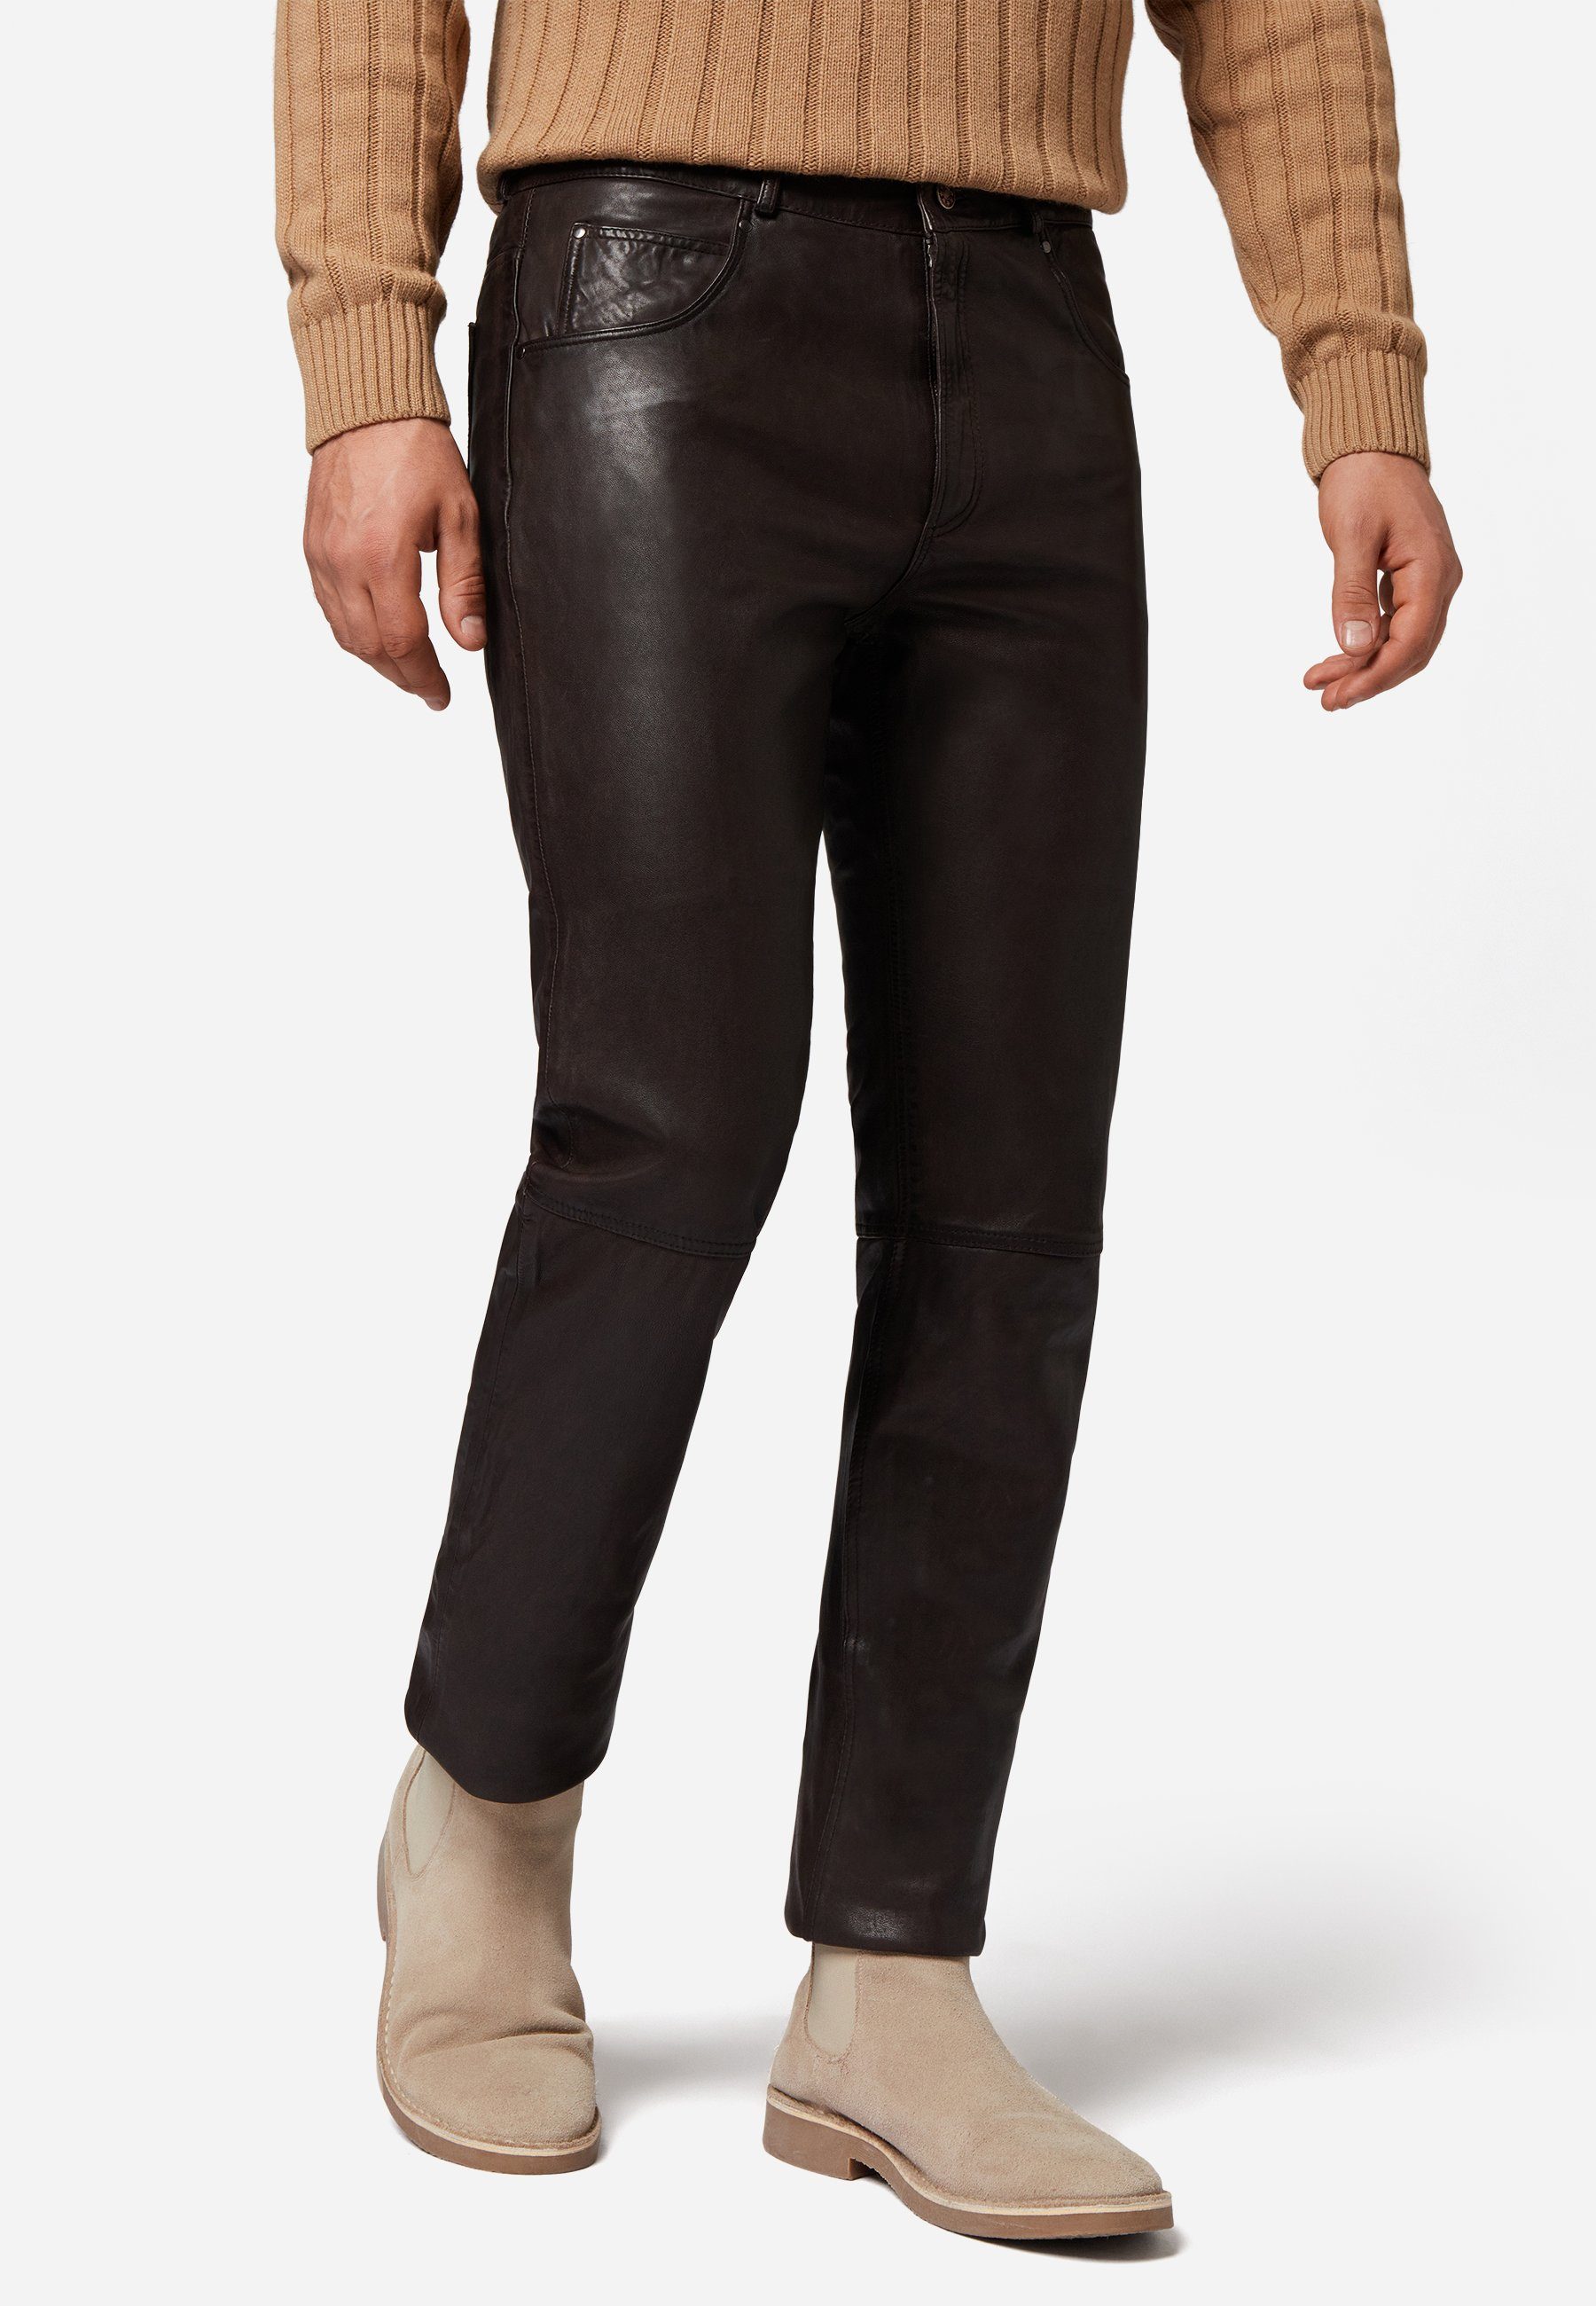 Pant Trant Lamm-Nappa RICANO Leder; Braun Lederhose Jeans-Optik 5-Pocket Hochwertiges